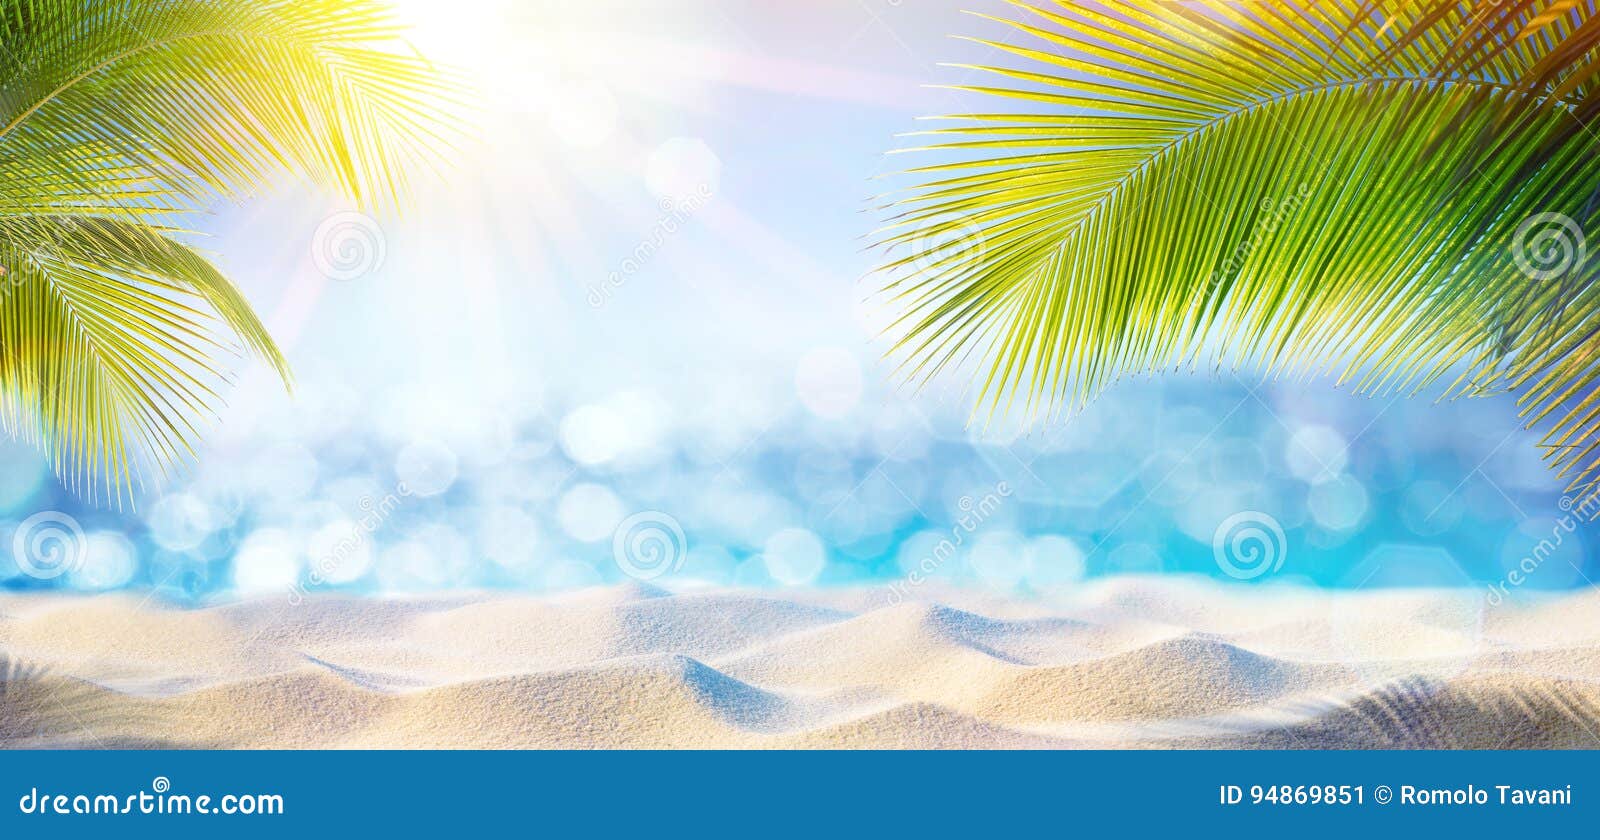 abstract beach background - sunny sand and shiny sea